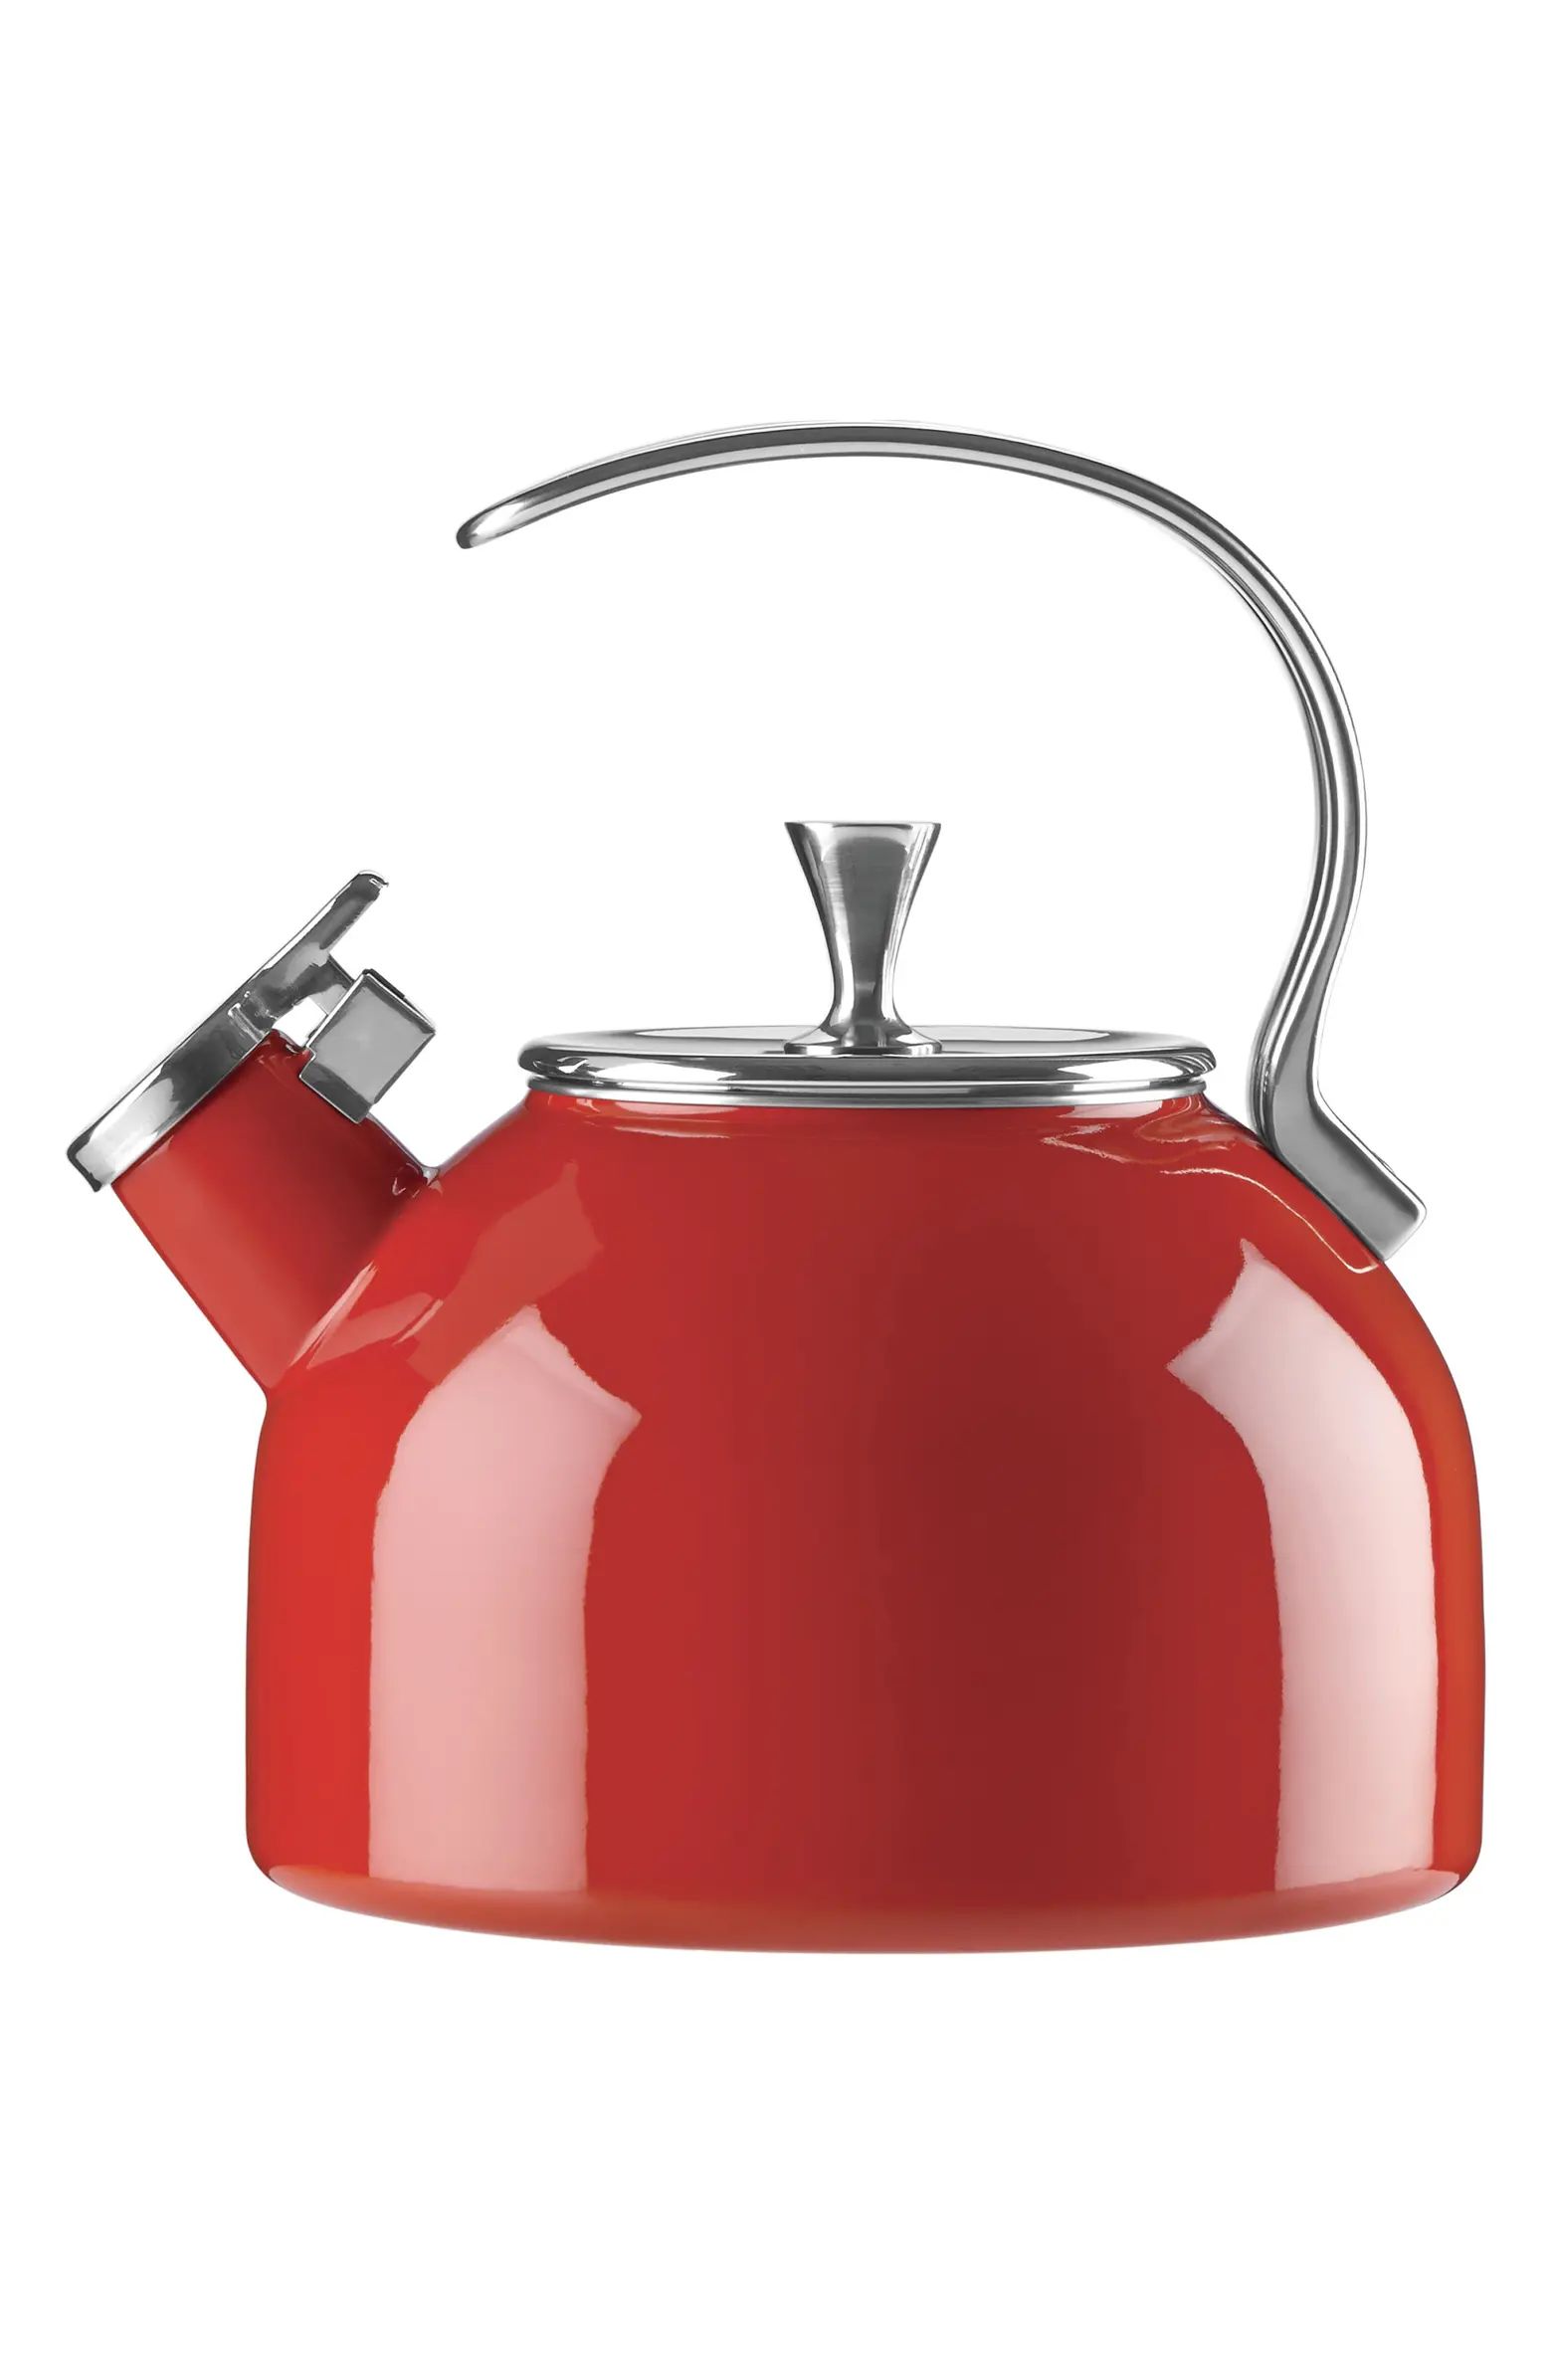 make it pop tea kettlekate spade new york | Nordstrom